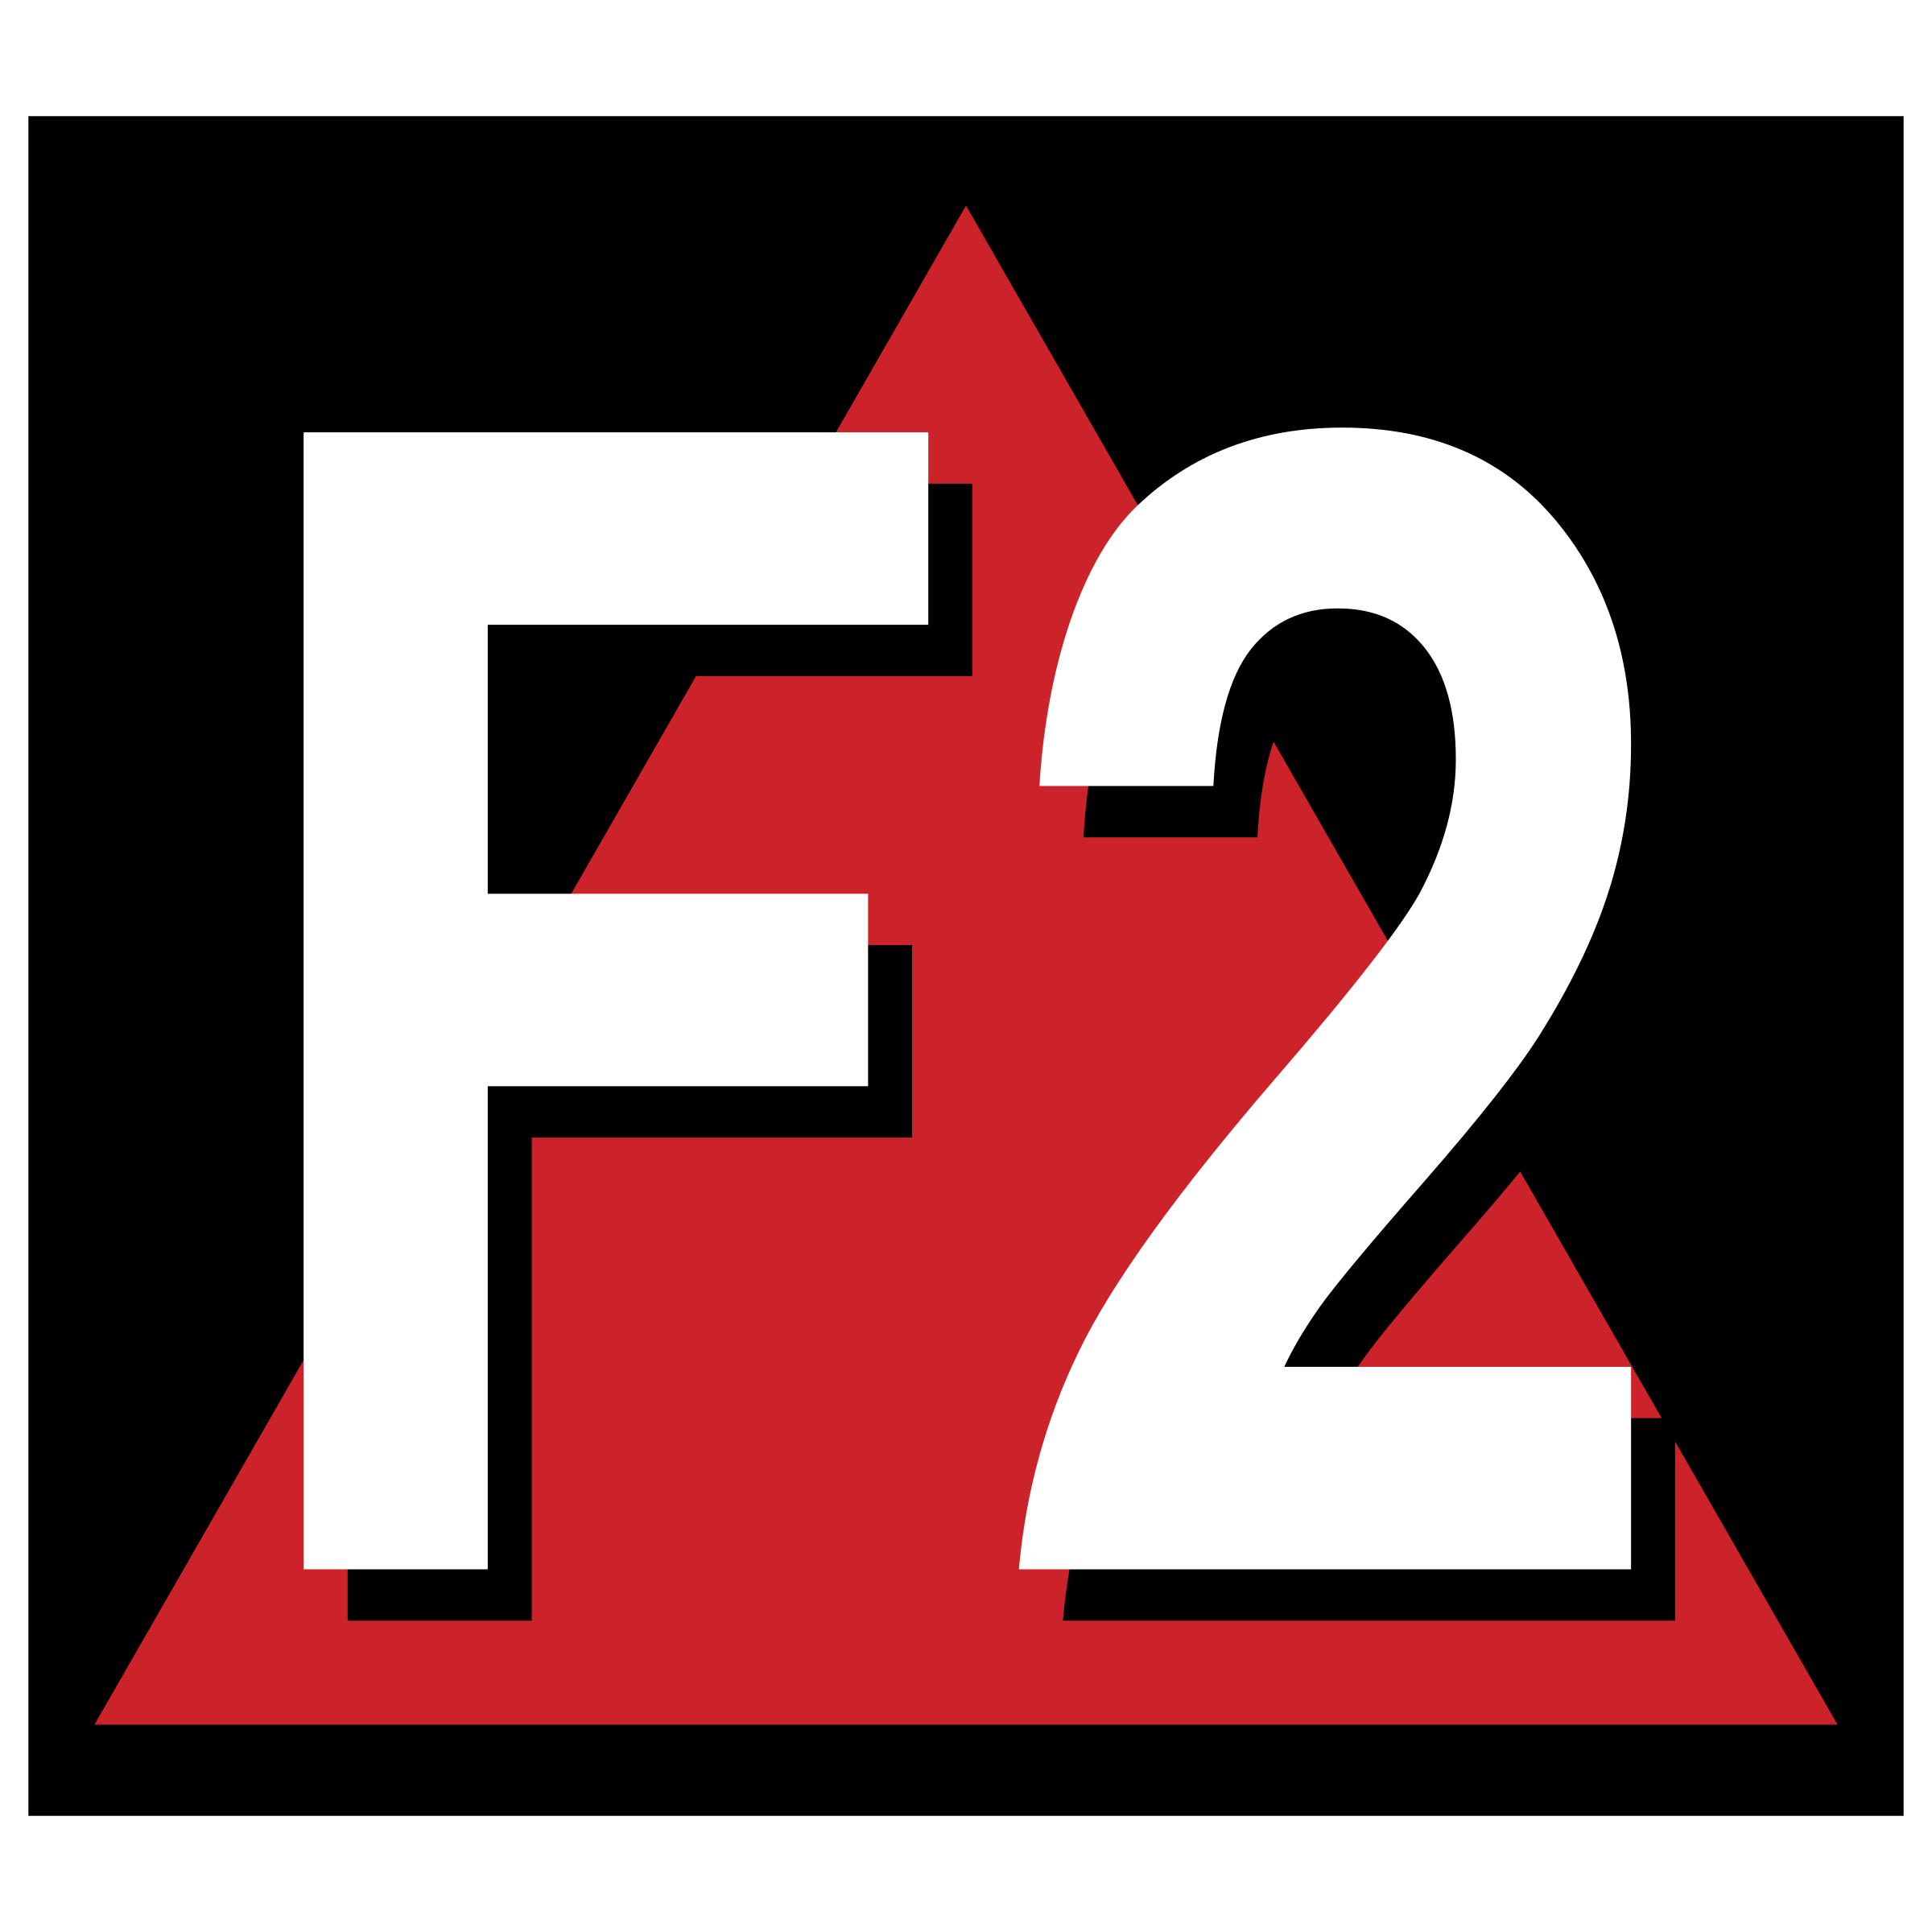 8.2 f. 2х2 лого. 2 Логотип. 2 В 1 логотип. Логотип f2.